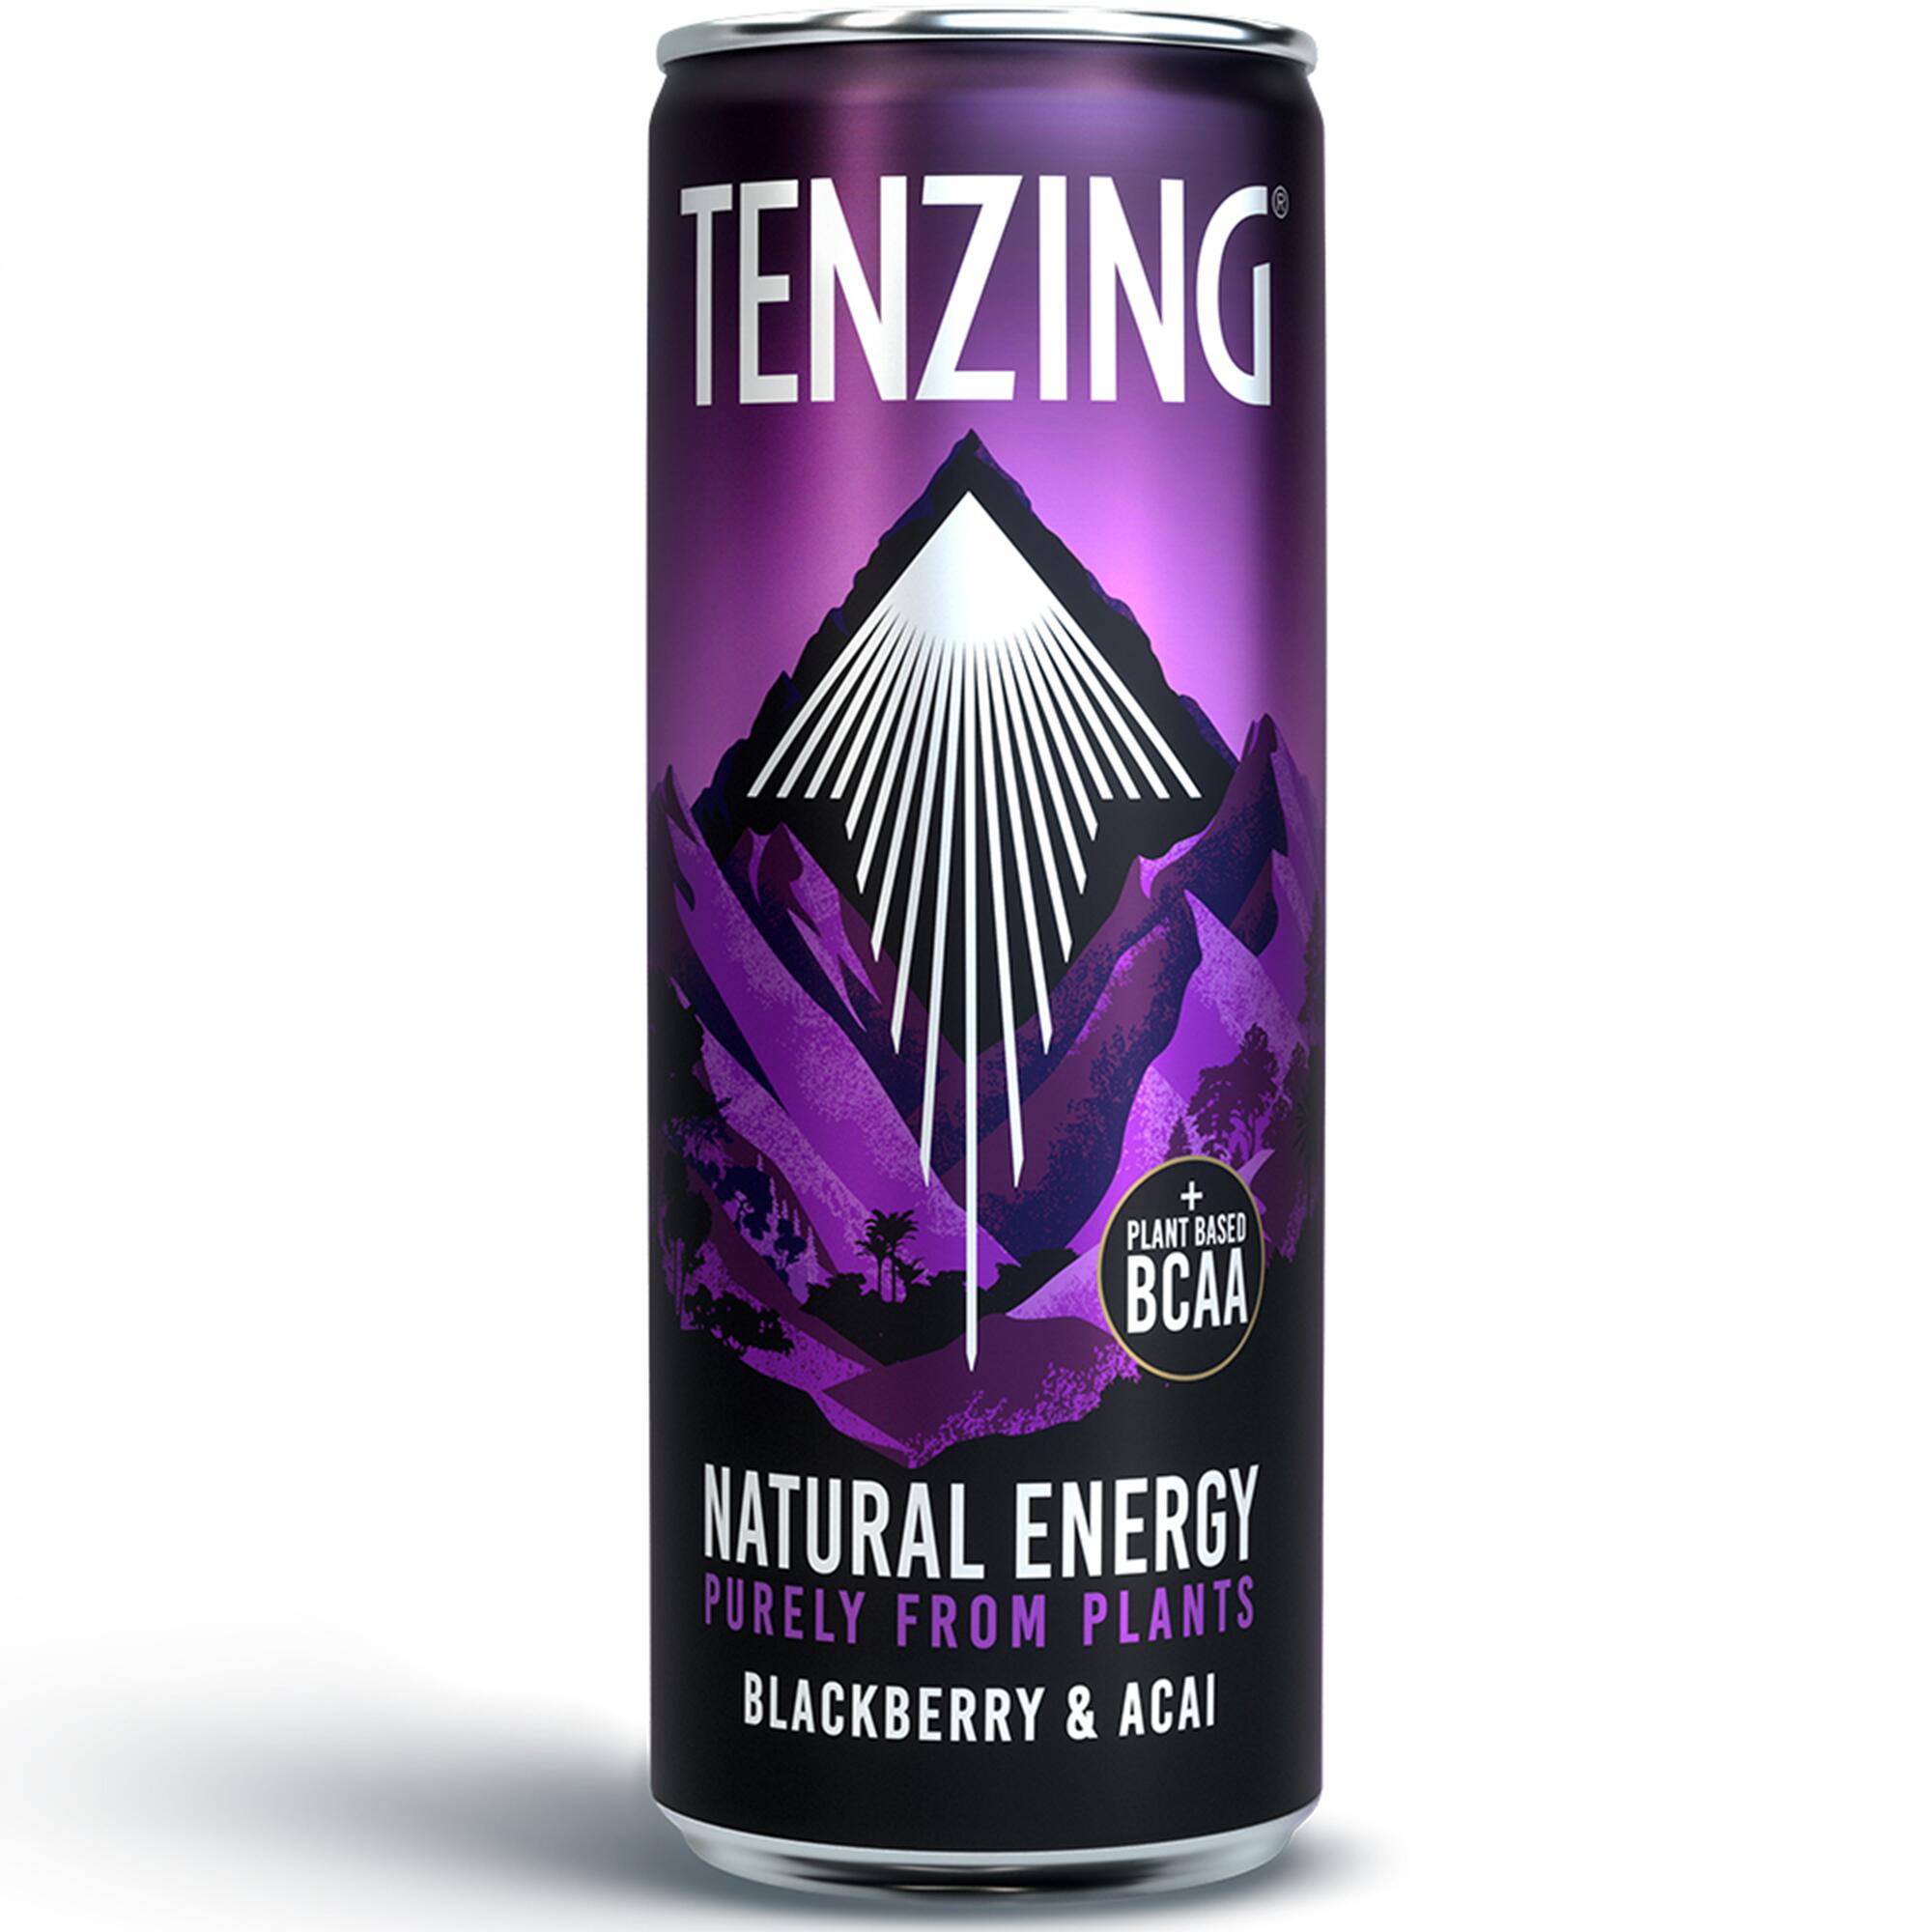 TENZING Natural Energy Drink Vegan, & Gluten Free Drink, +BCAA, Blackberry & Acai, 330ml